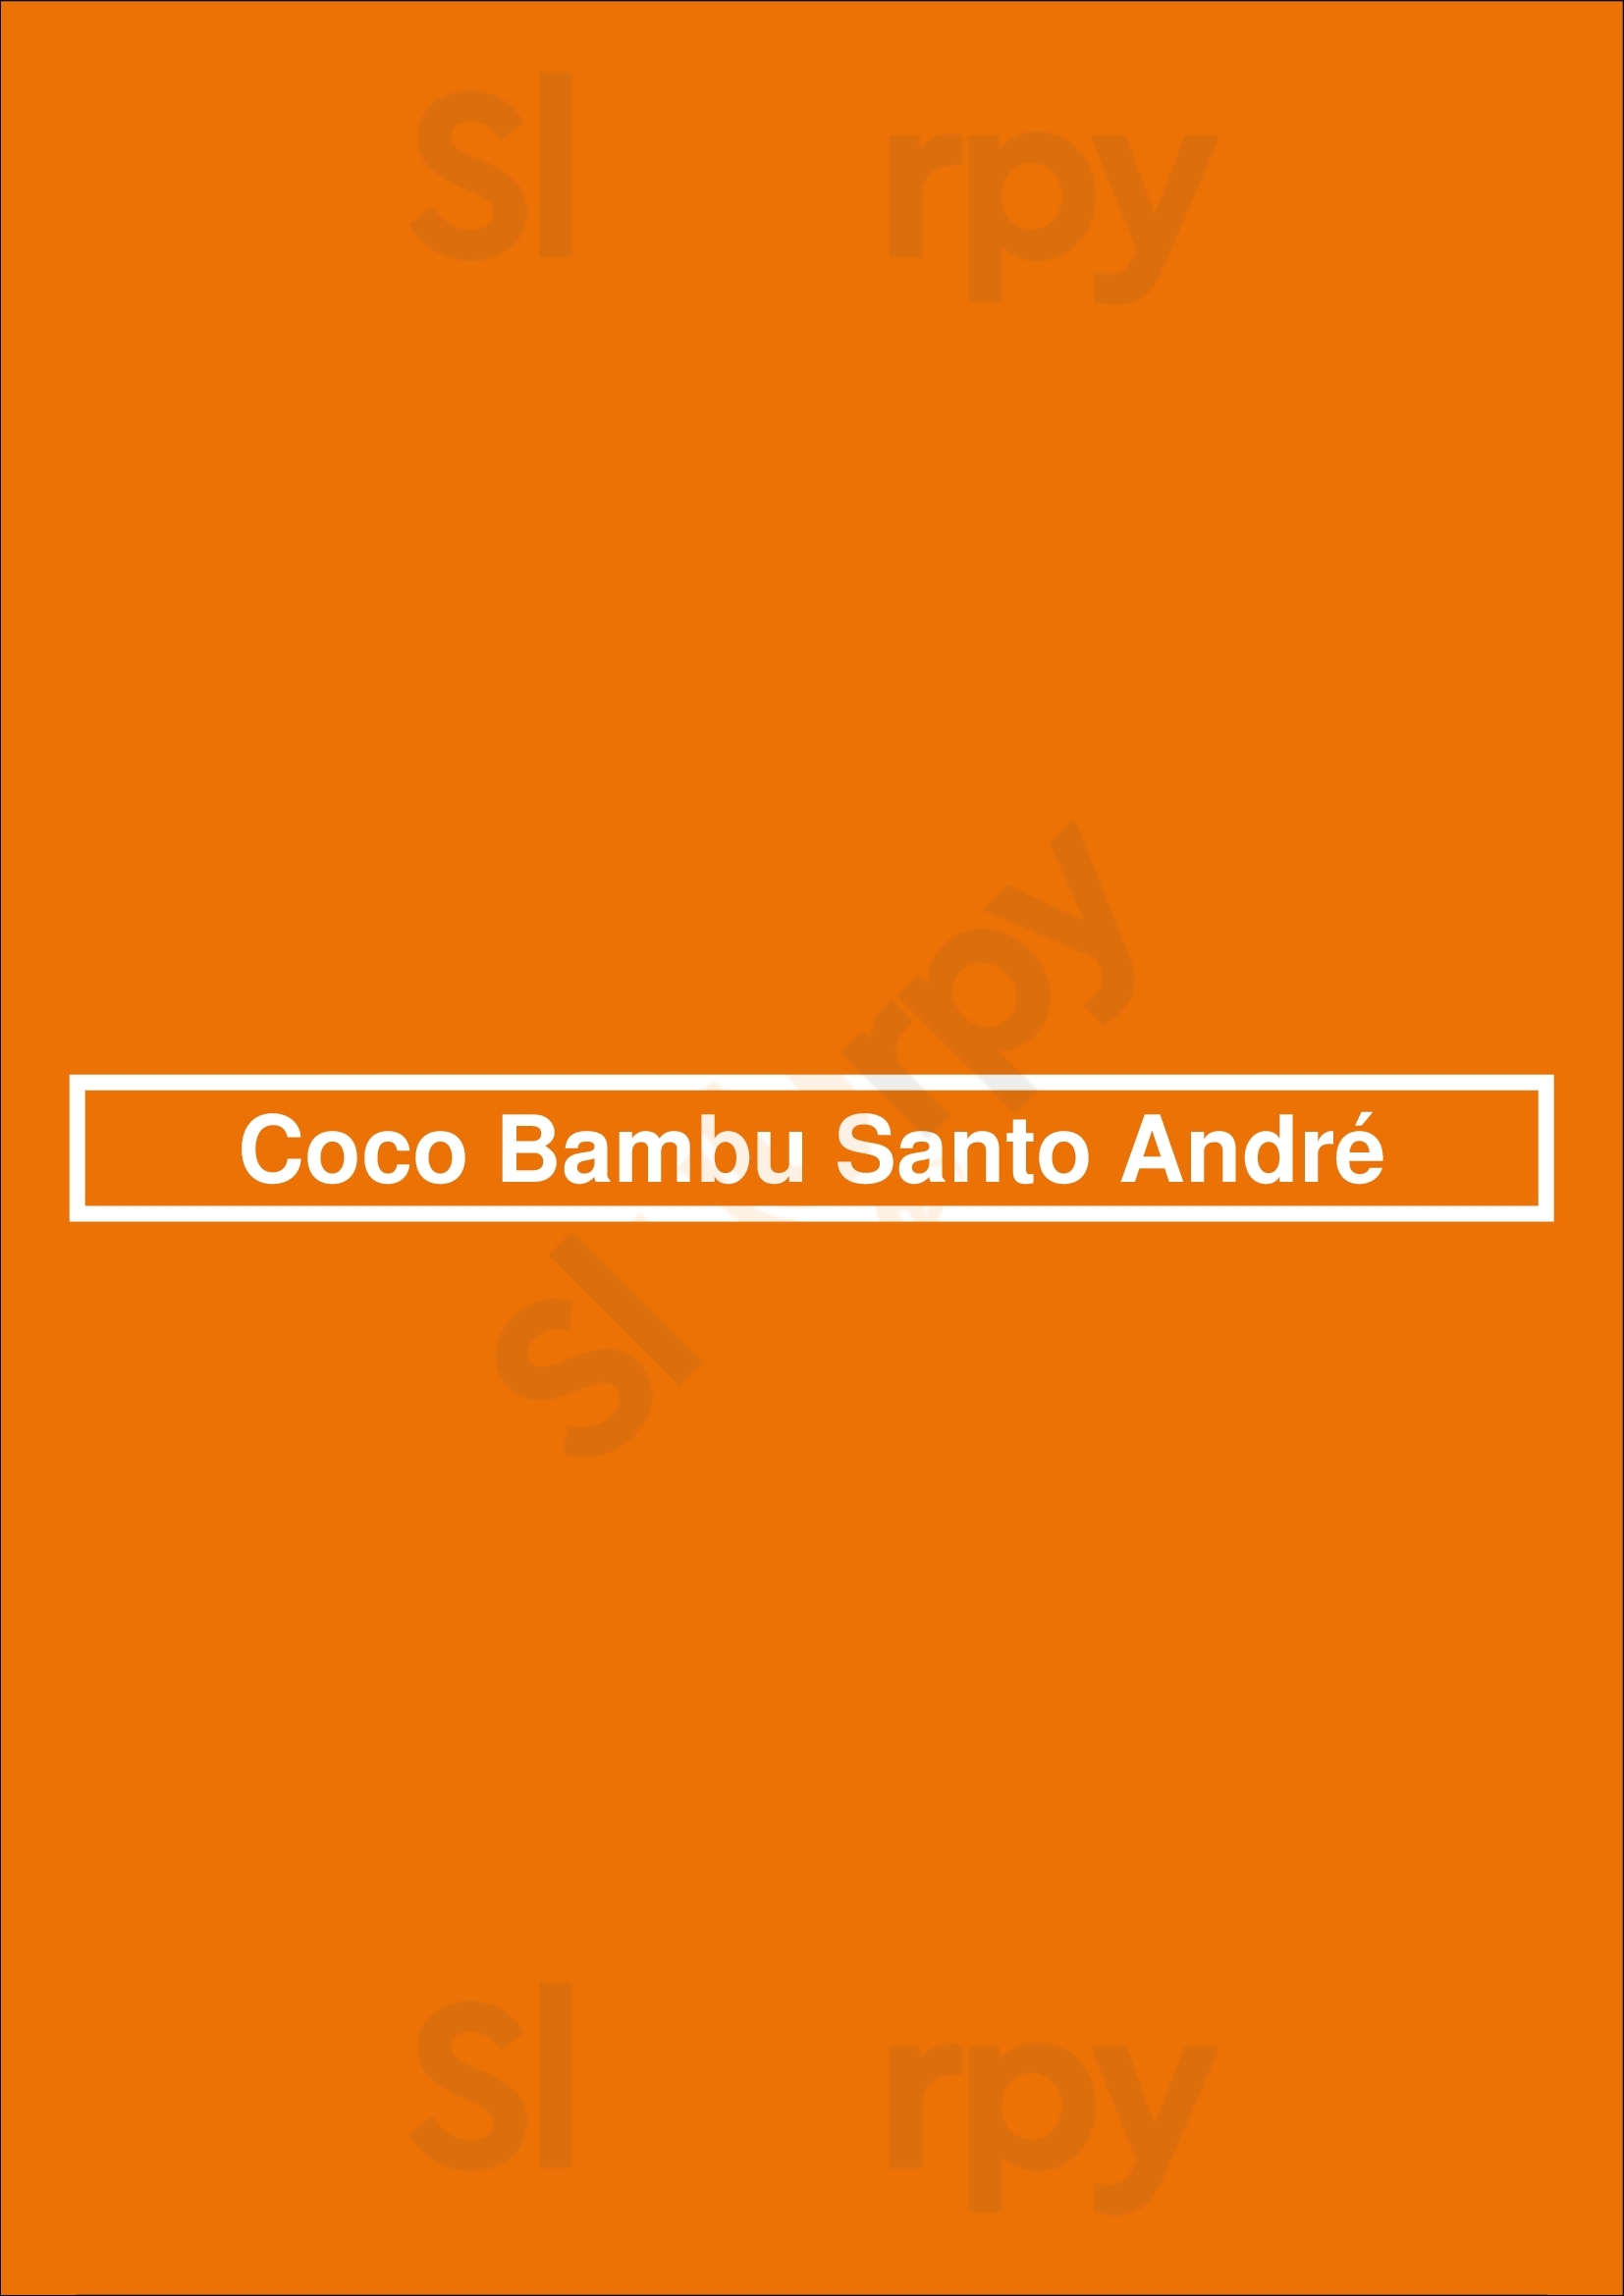 Coco Bambu Santo André Santo André Menu - 1